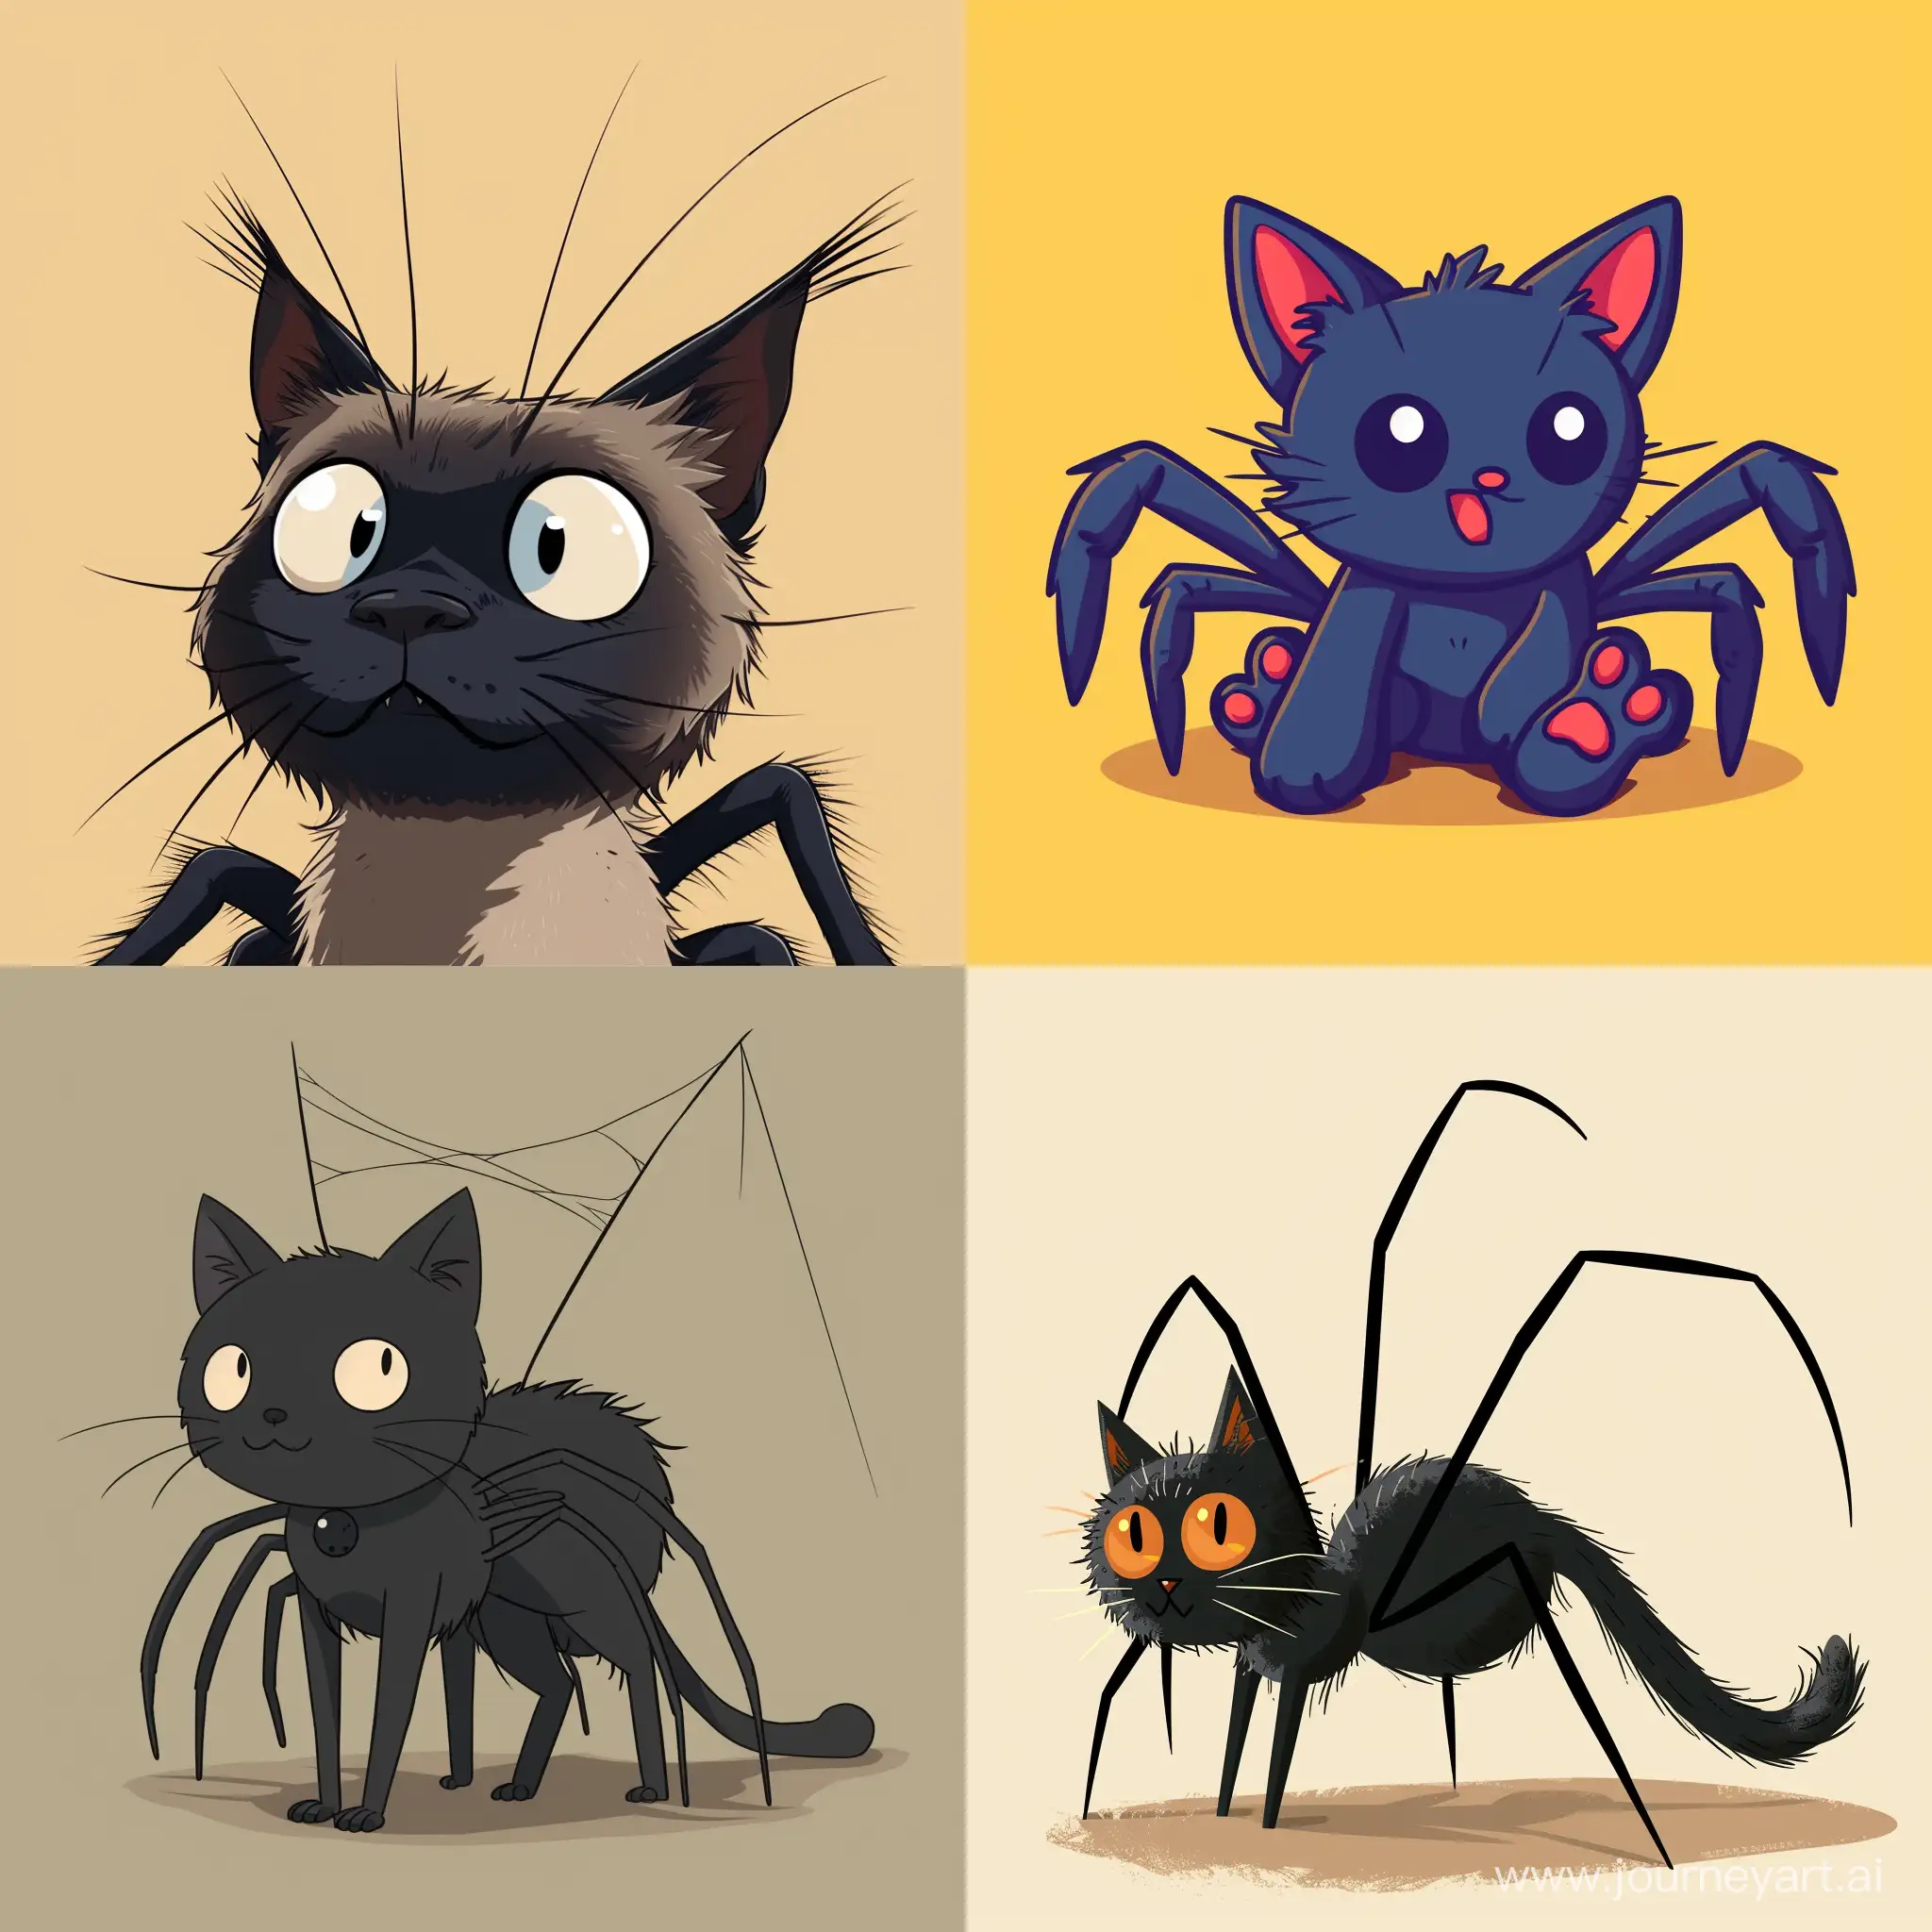 spider - cat, cartoon style